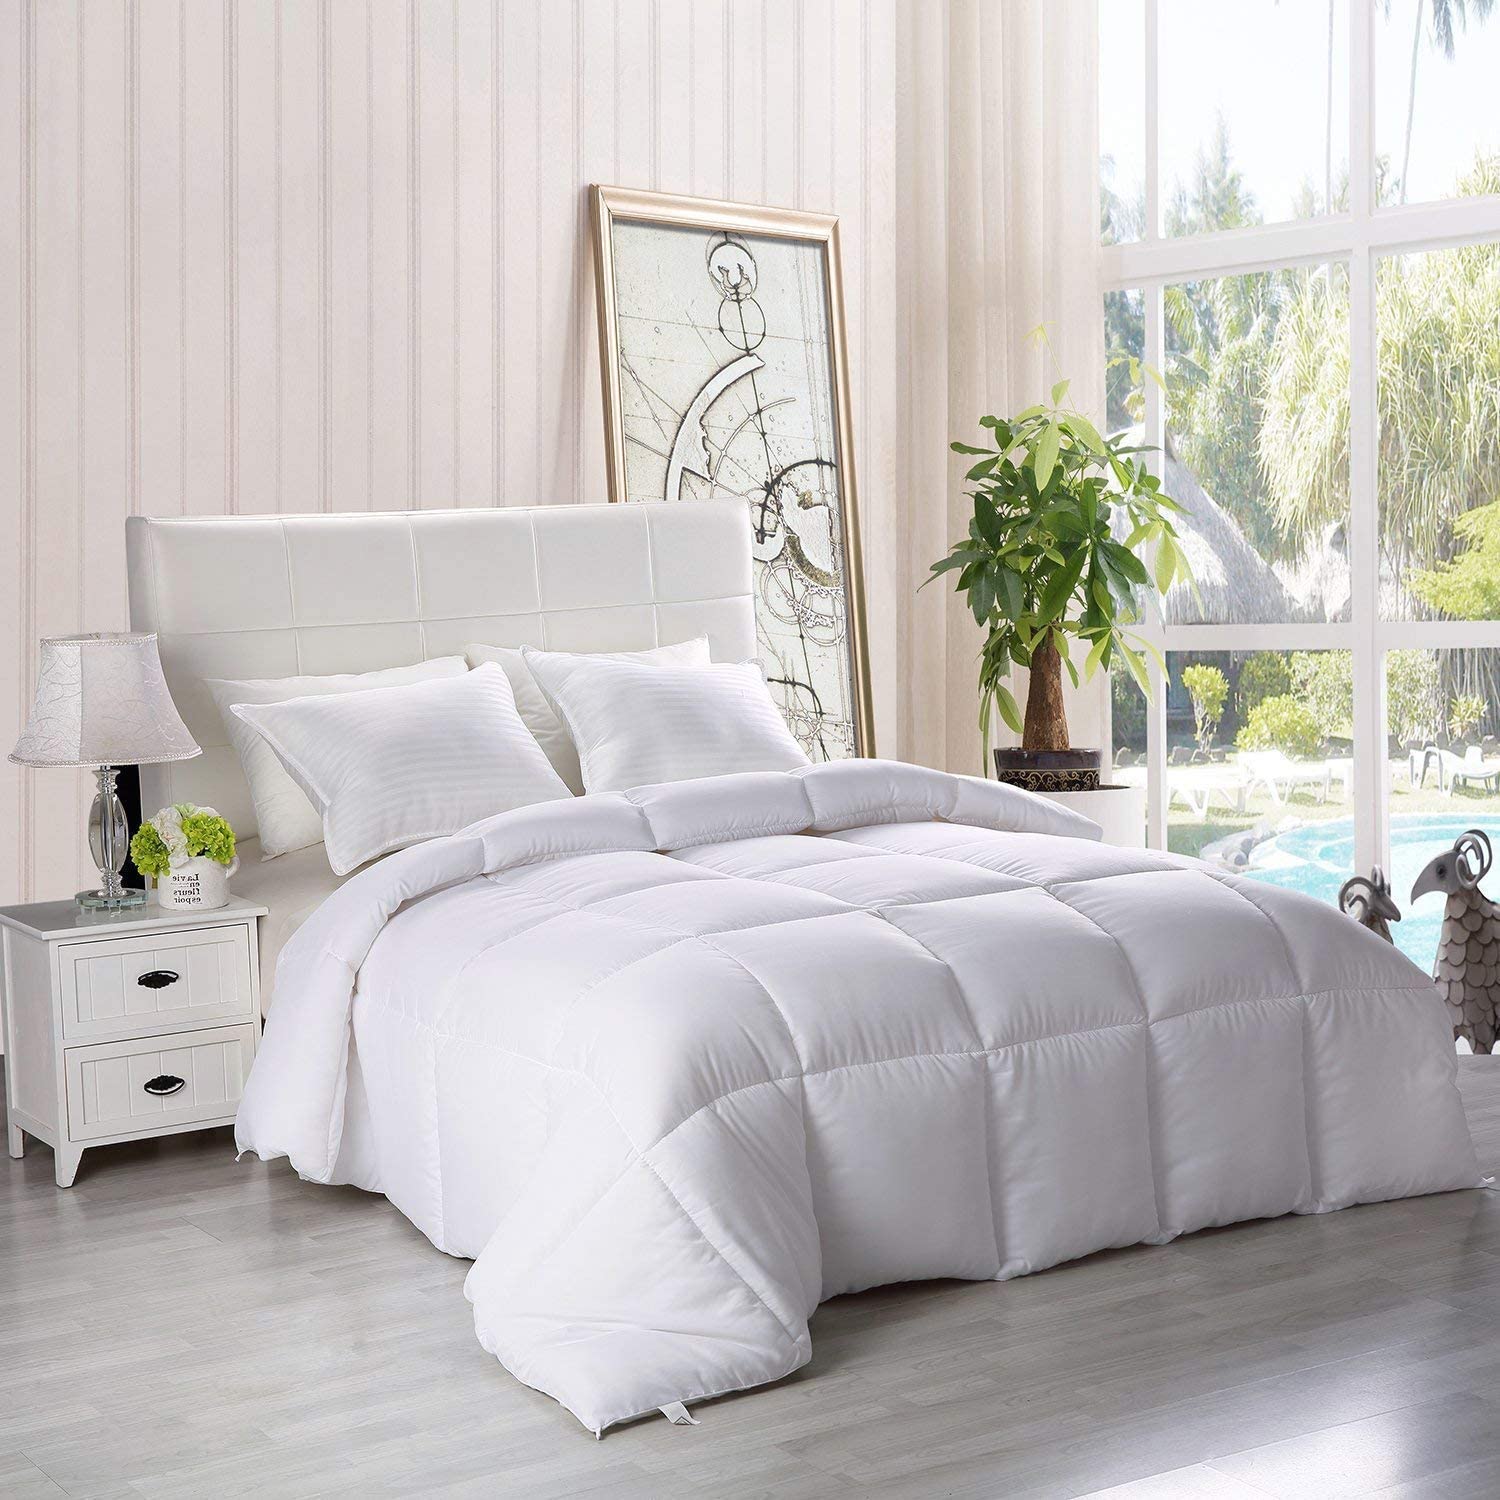 Utopia Bedding All Season 250 GSM Comforter - Soft Down Alternative Co